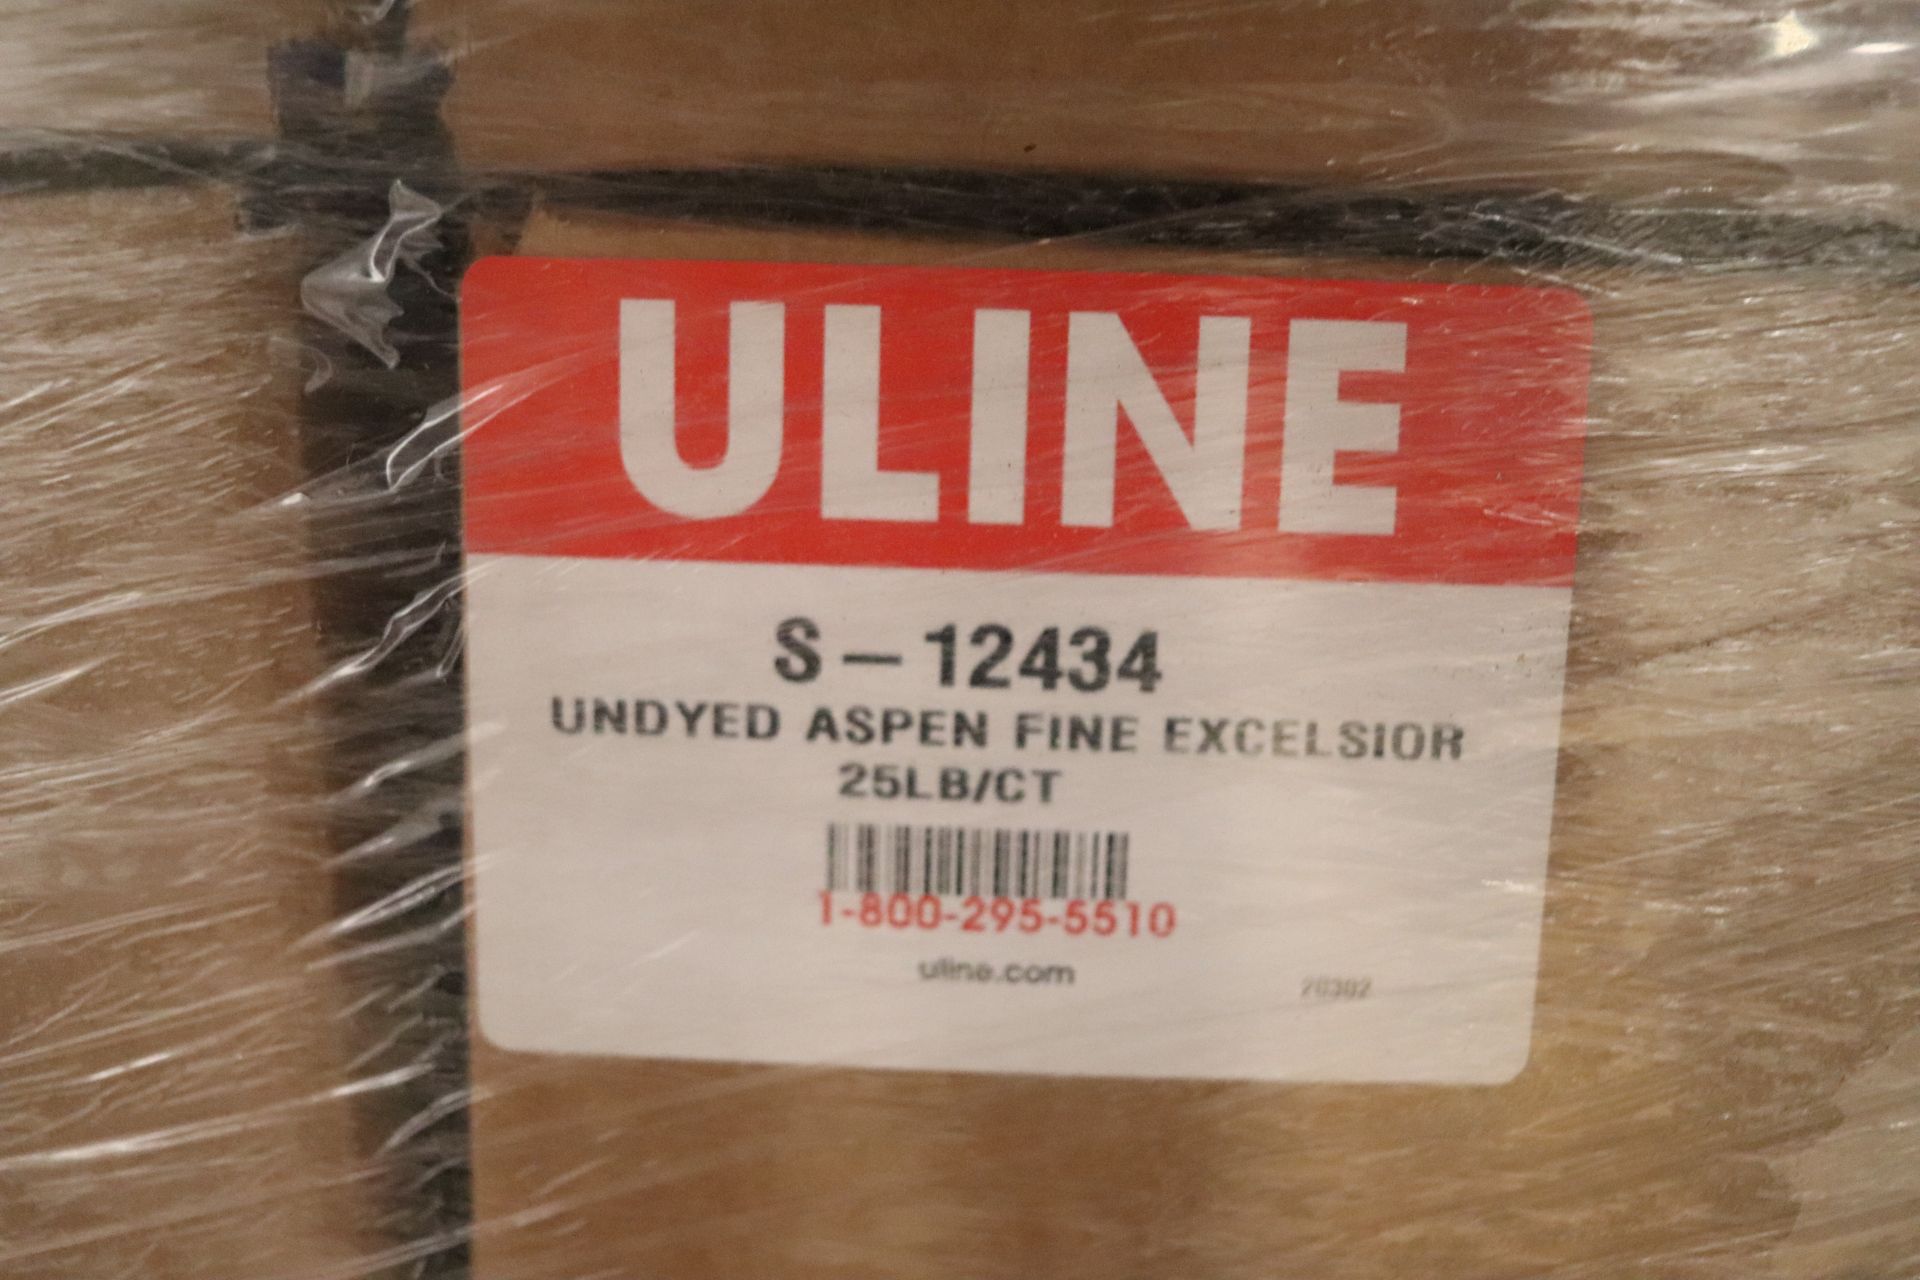 Eleven cases of Uline undyed Aspen Fine Excelsior packing material, model S-12434 - Image 3 of 3